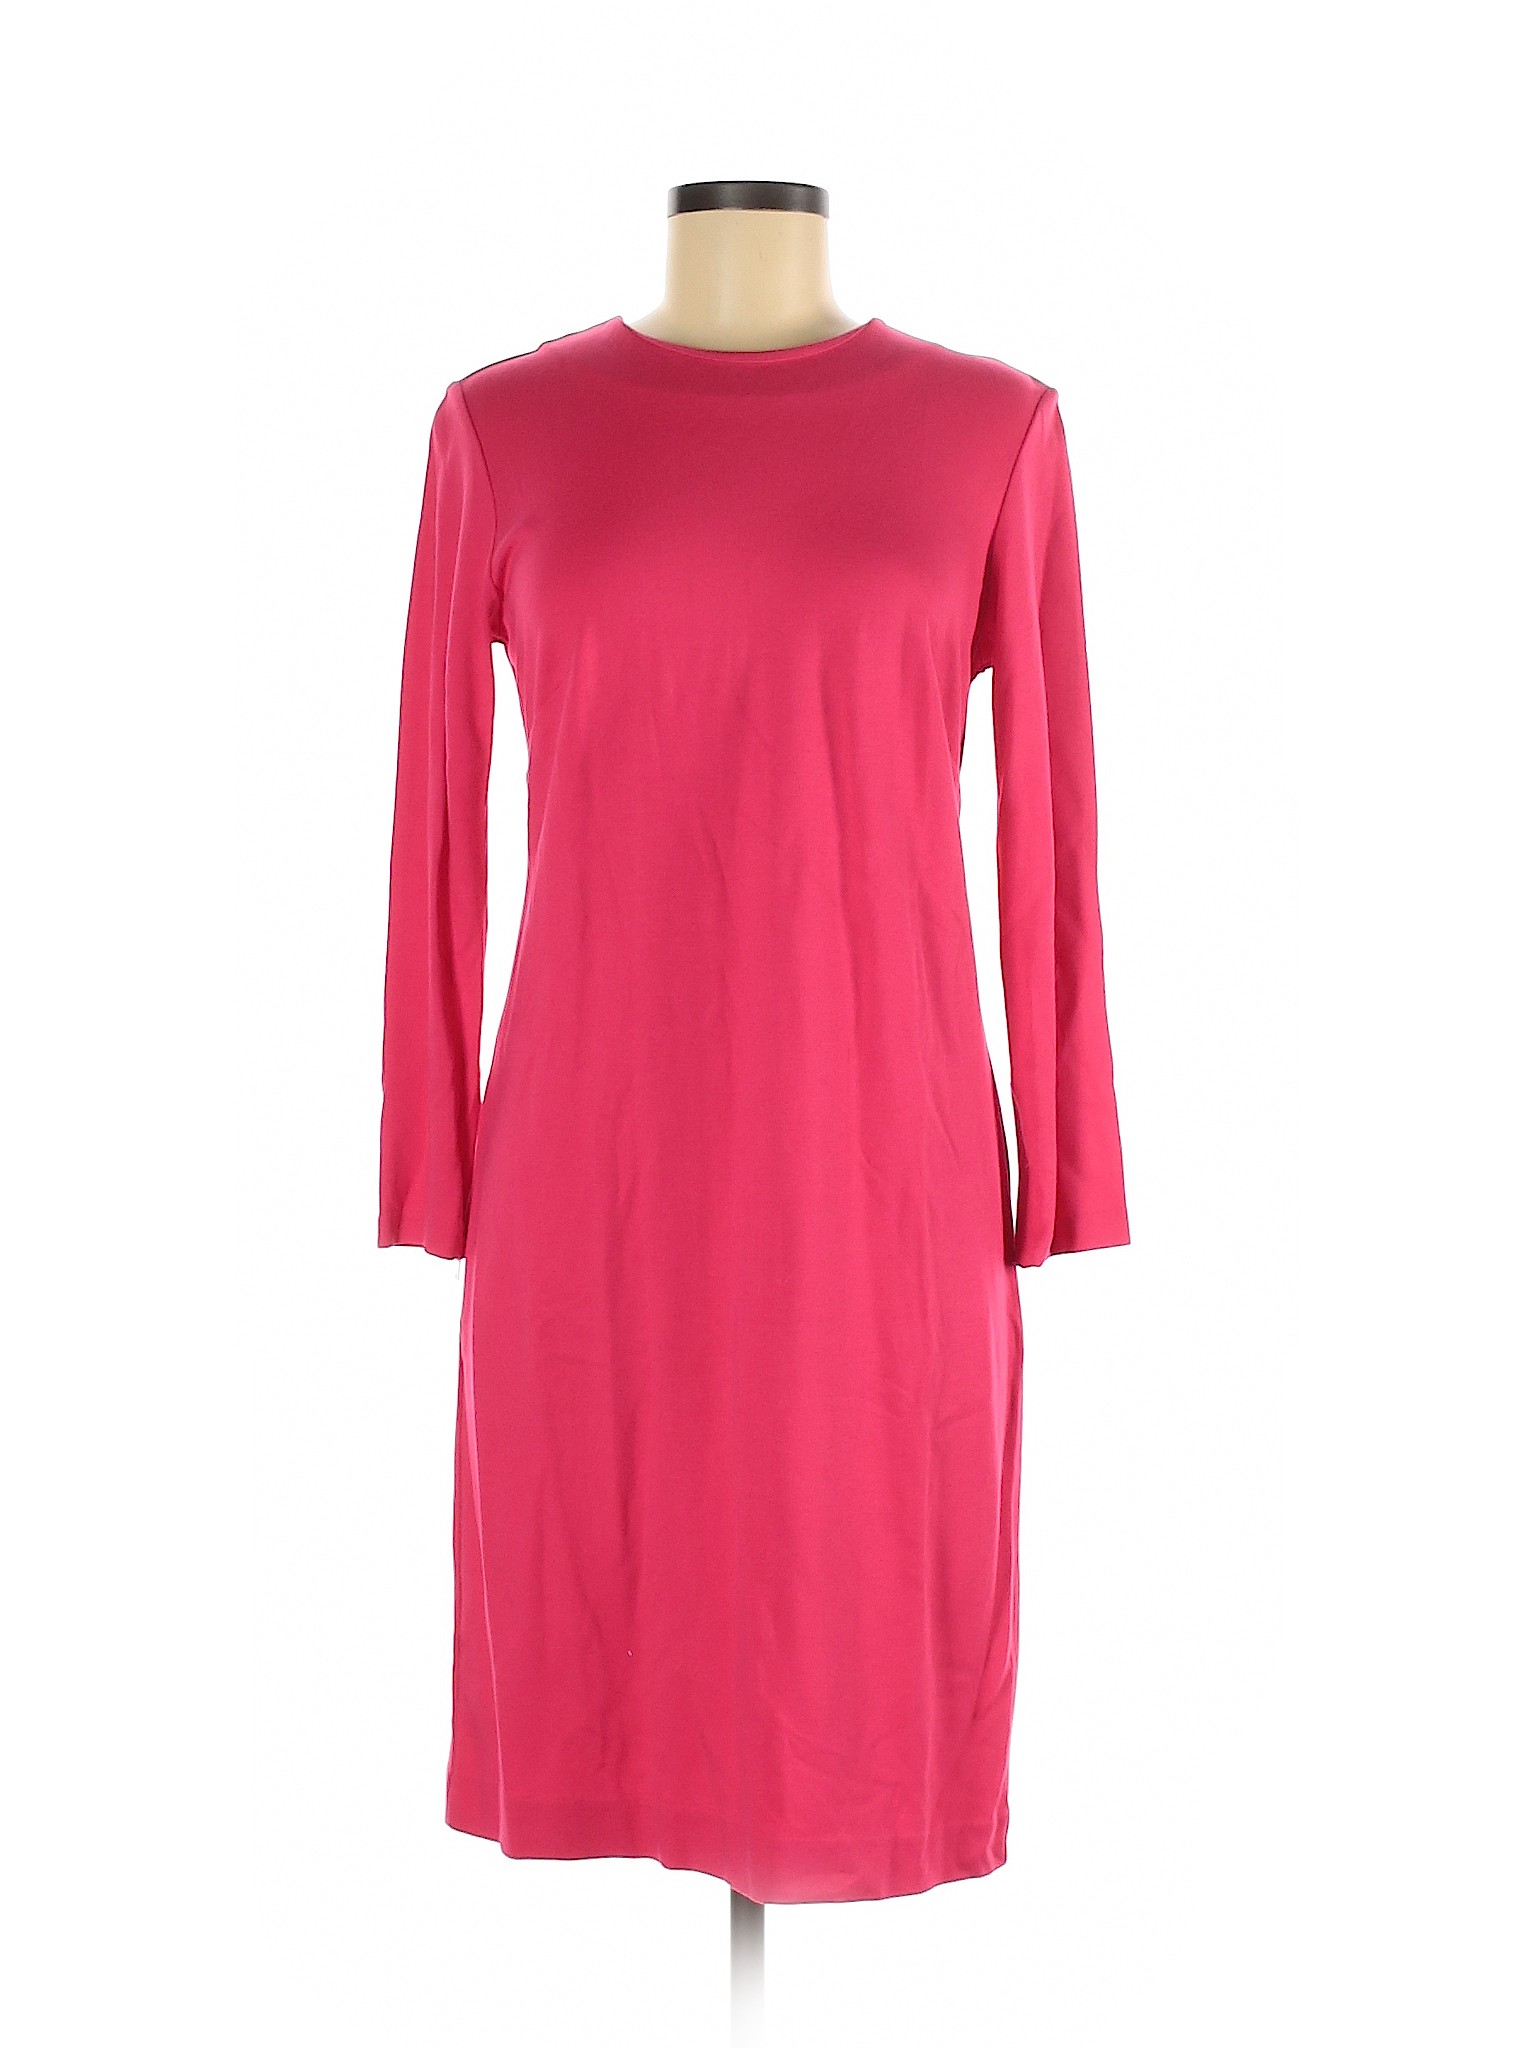 Ann Taylor Women Pink Casual Dress 6 | eBay